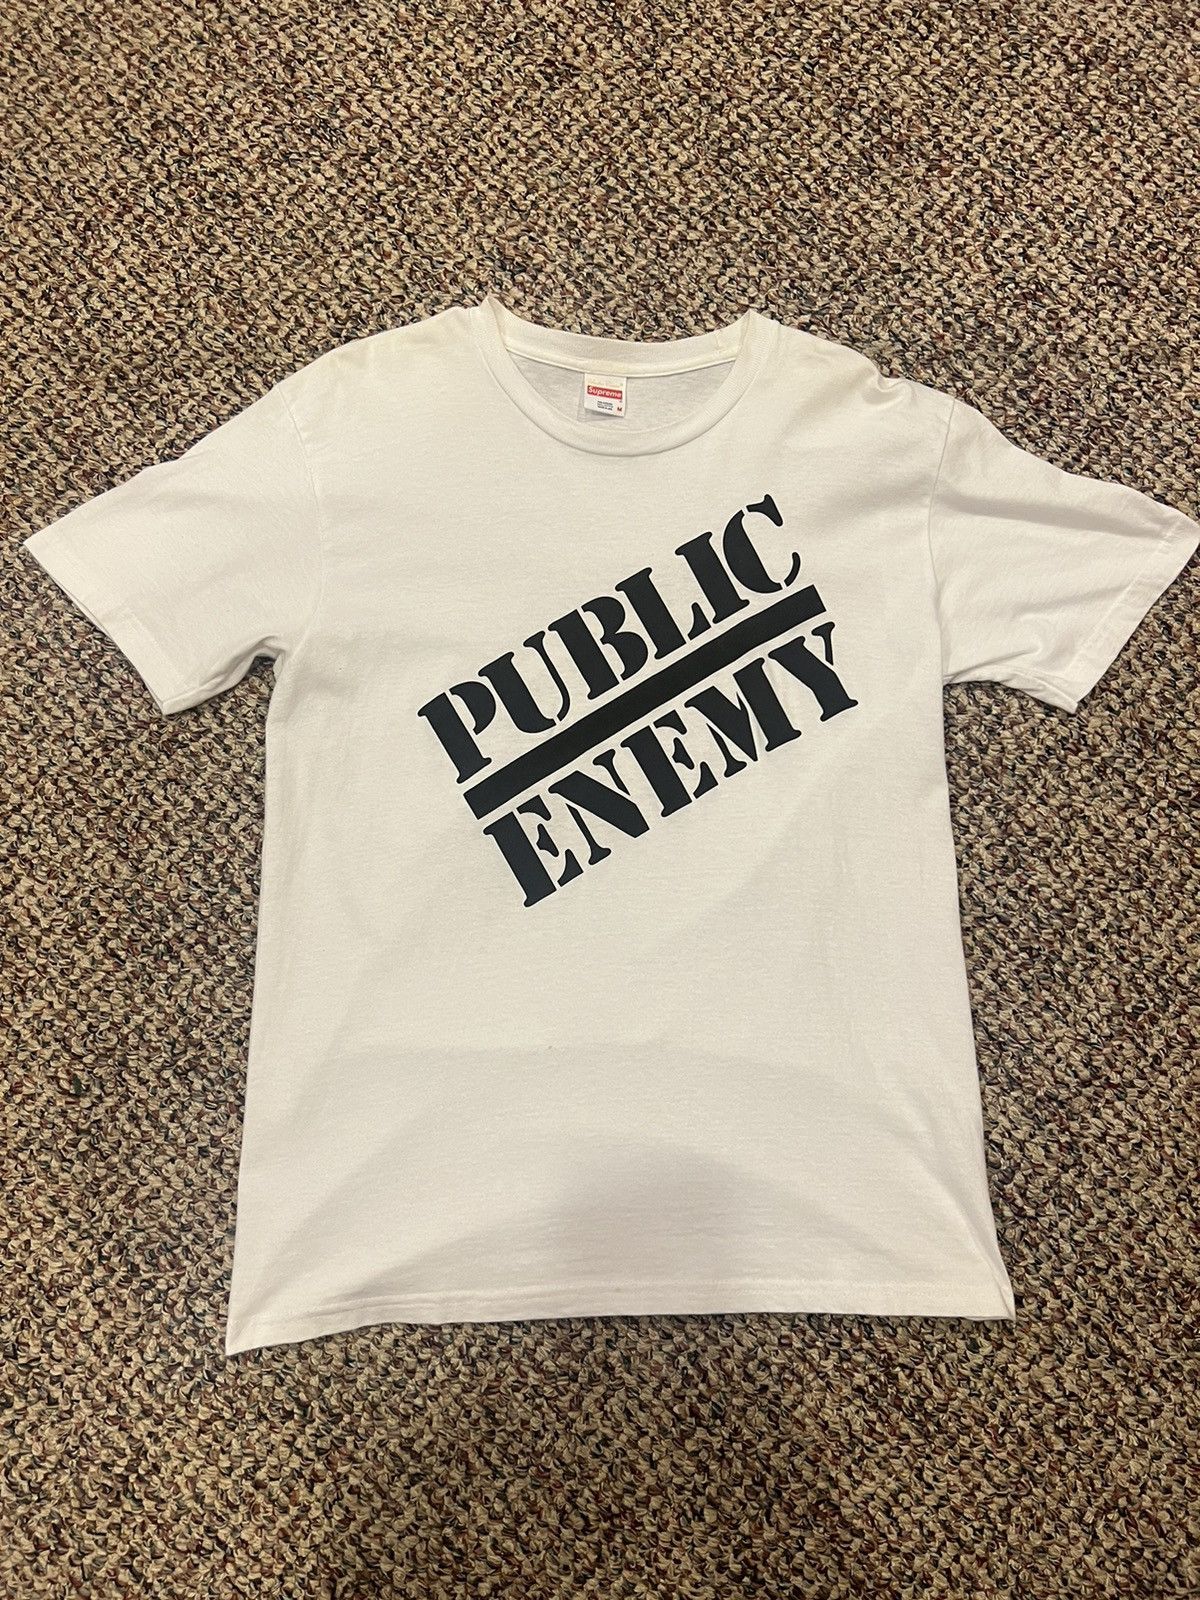 Supreme Supreme X Undercover Public Enemy Blow Your Mind T-Shirt | Grailed